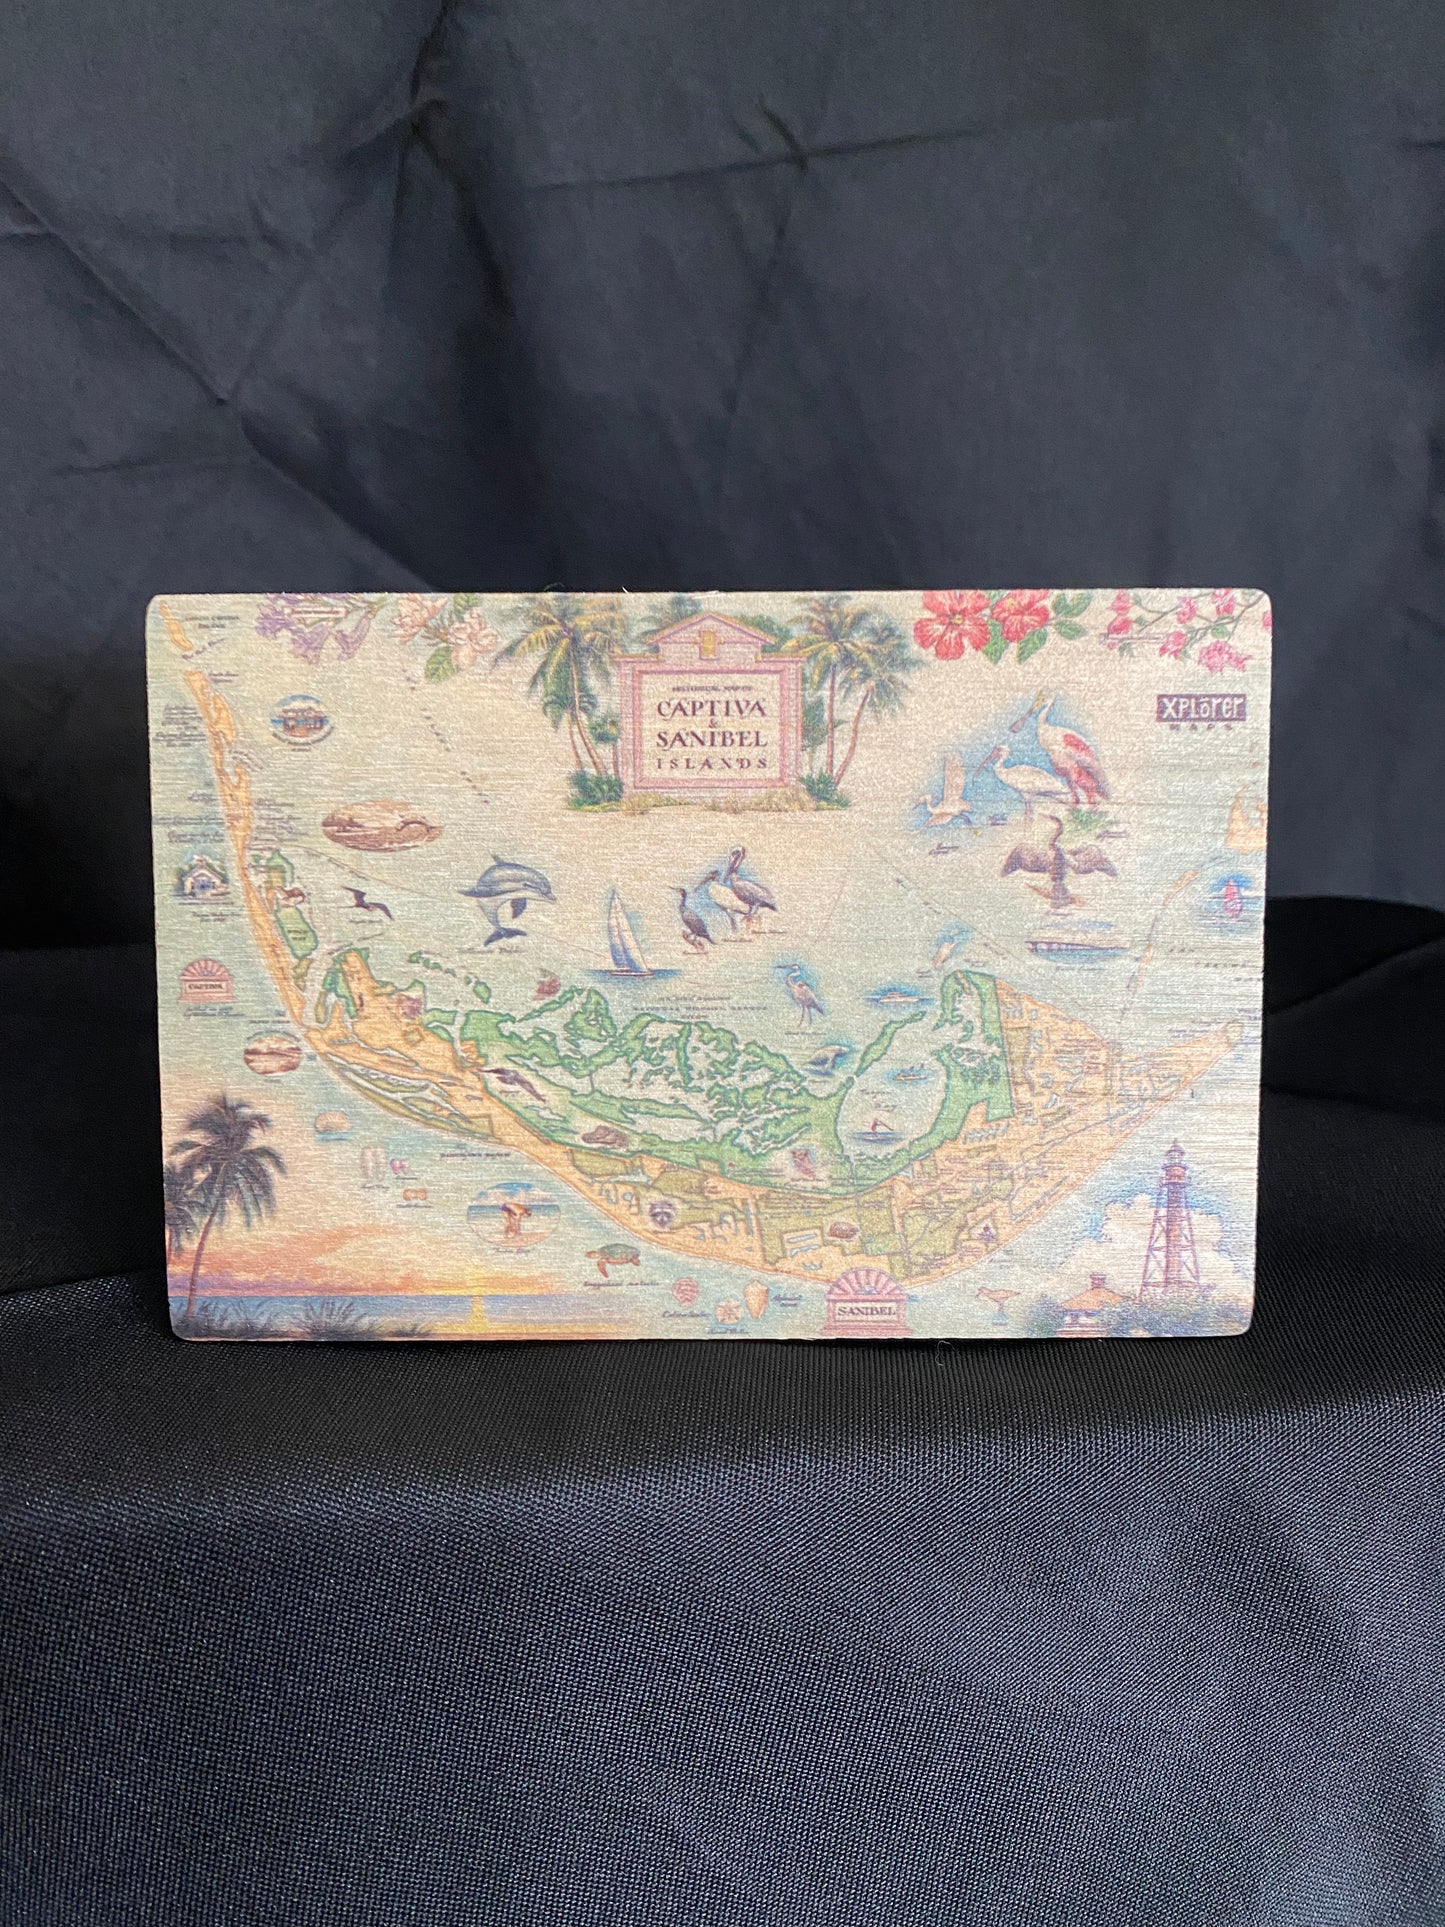 Sanibel & Captiva Vintage Map Items: Tote Bag, Sticker, Note Card, Post Card, Blanket, Puzzlepp